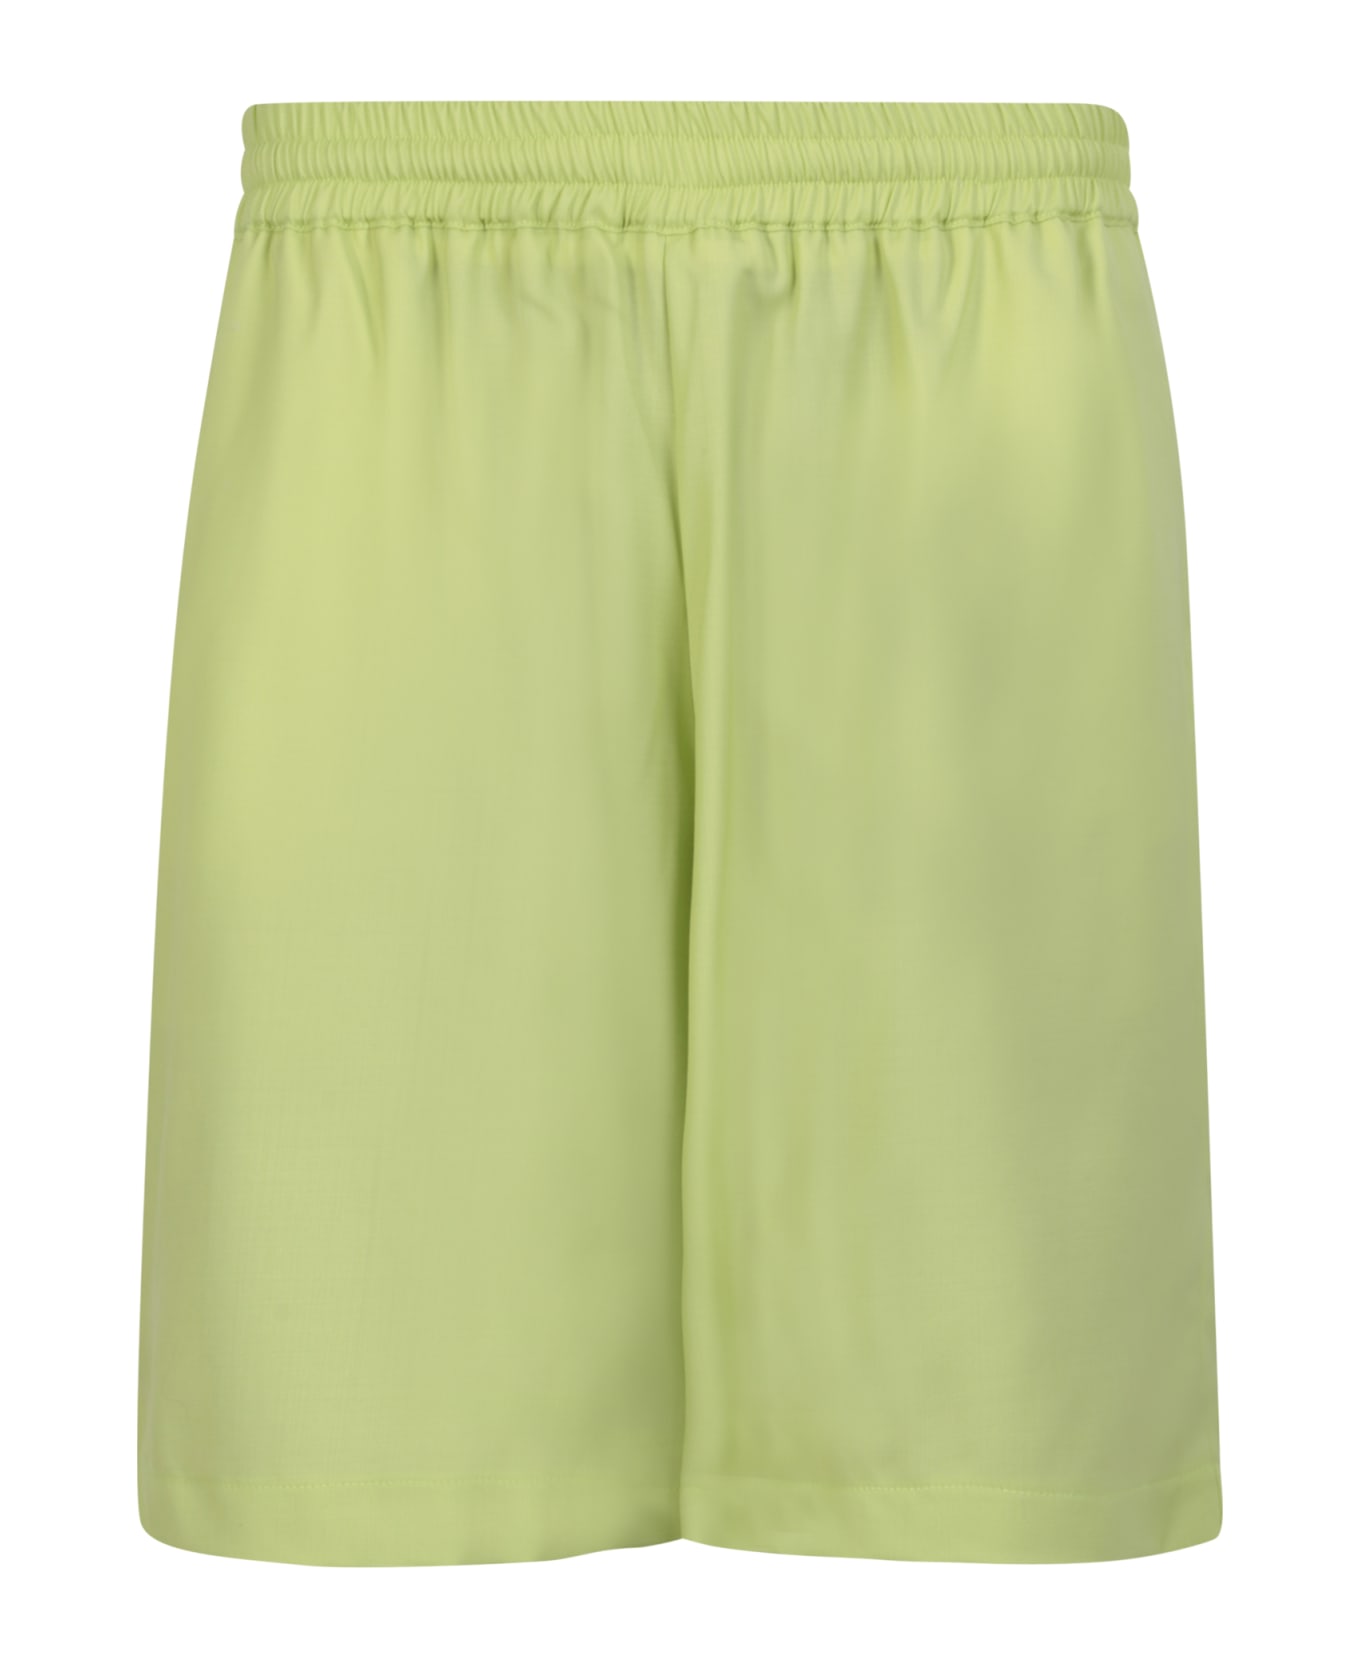 Bonsai Lime Green Shorts - Green